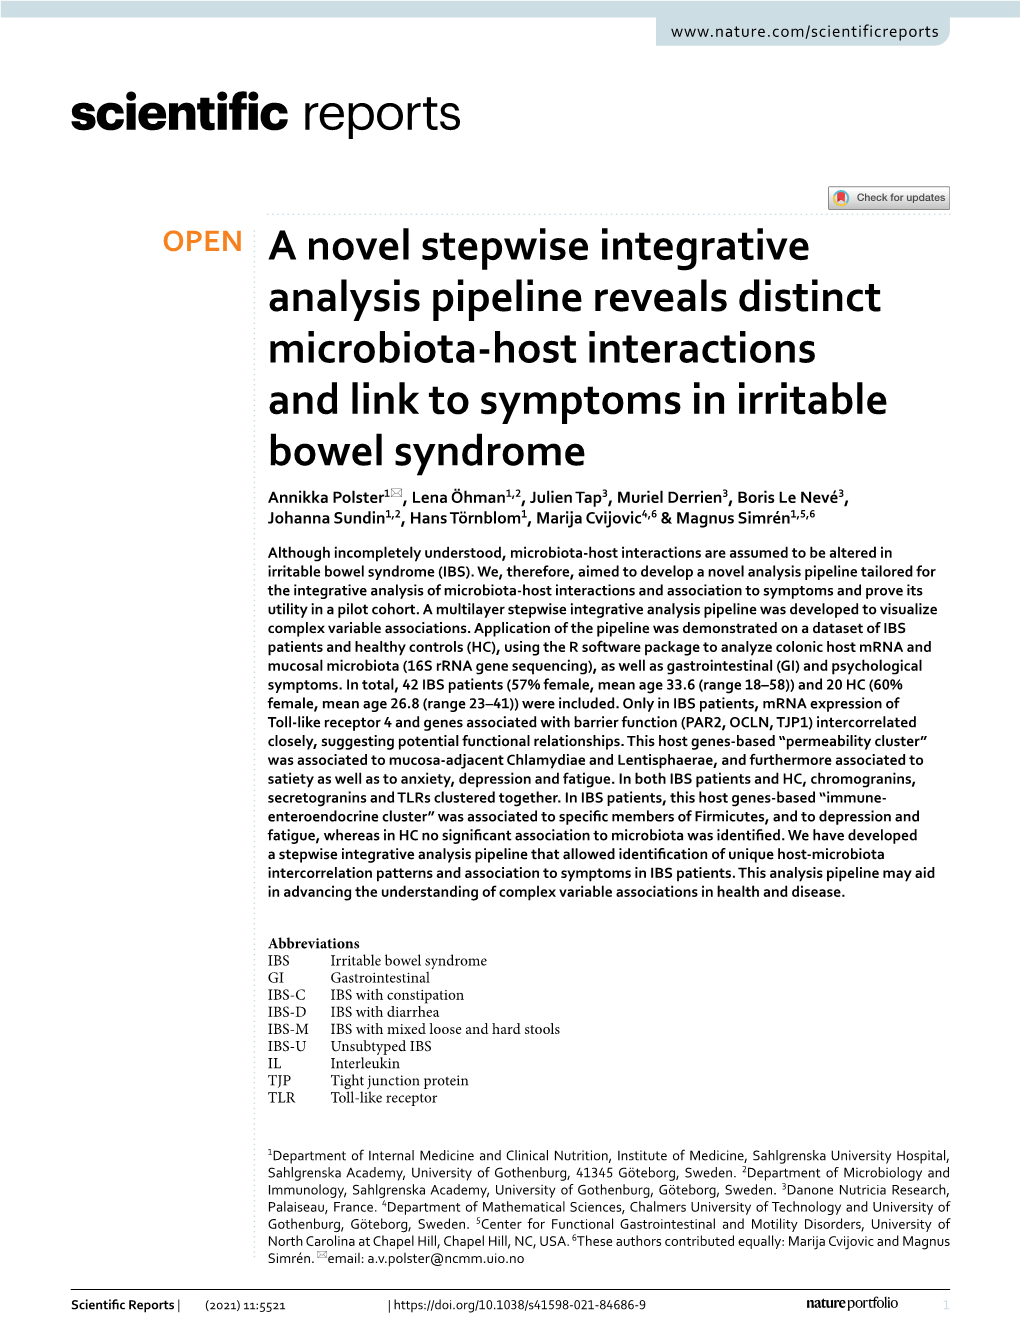 A Novel Stepwise Integrative Analysis Pipeline Reveals Distinct Microbiota